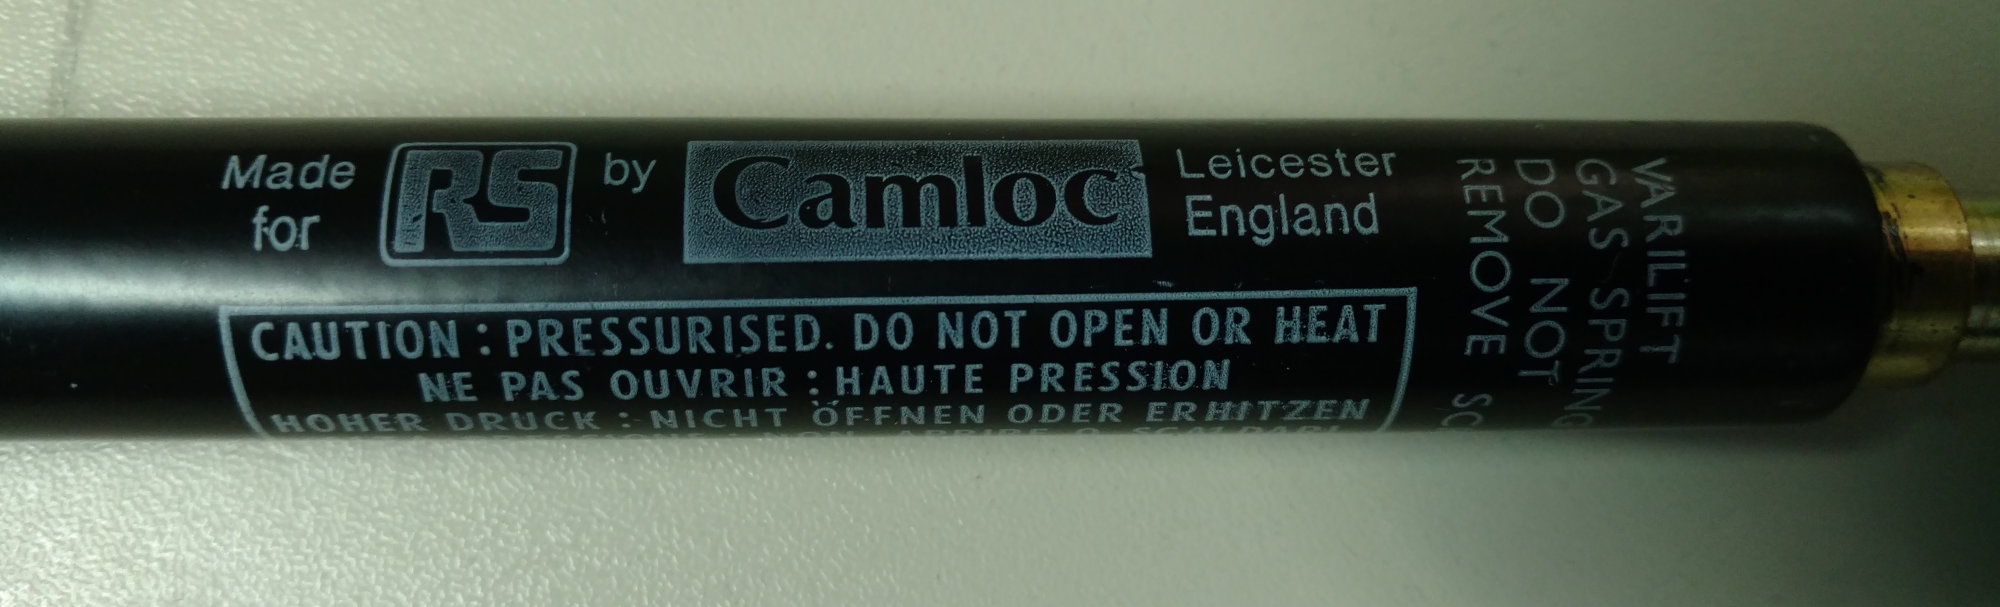 Camloc RS-182